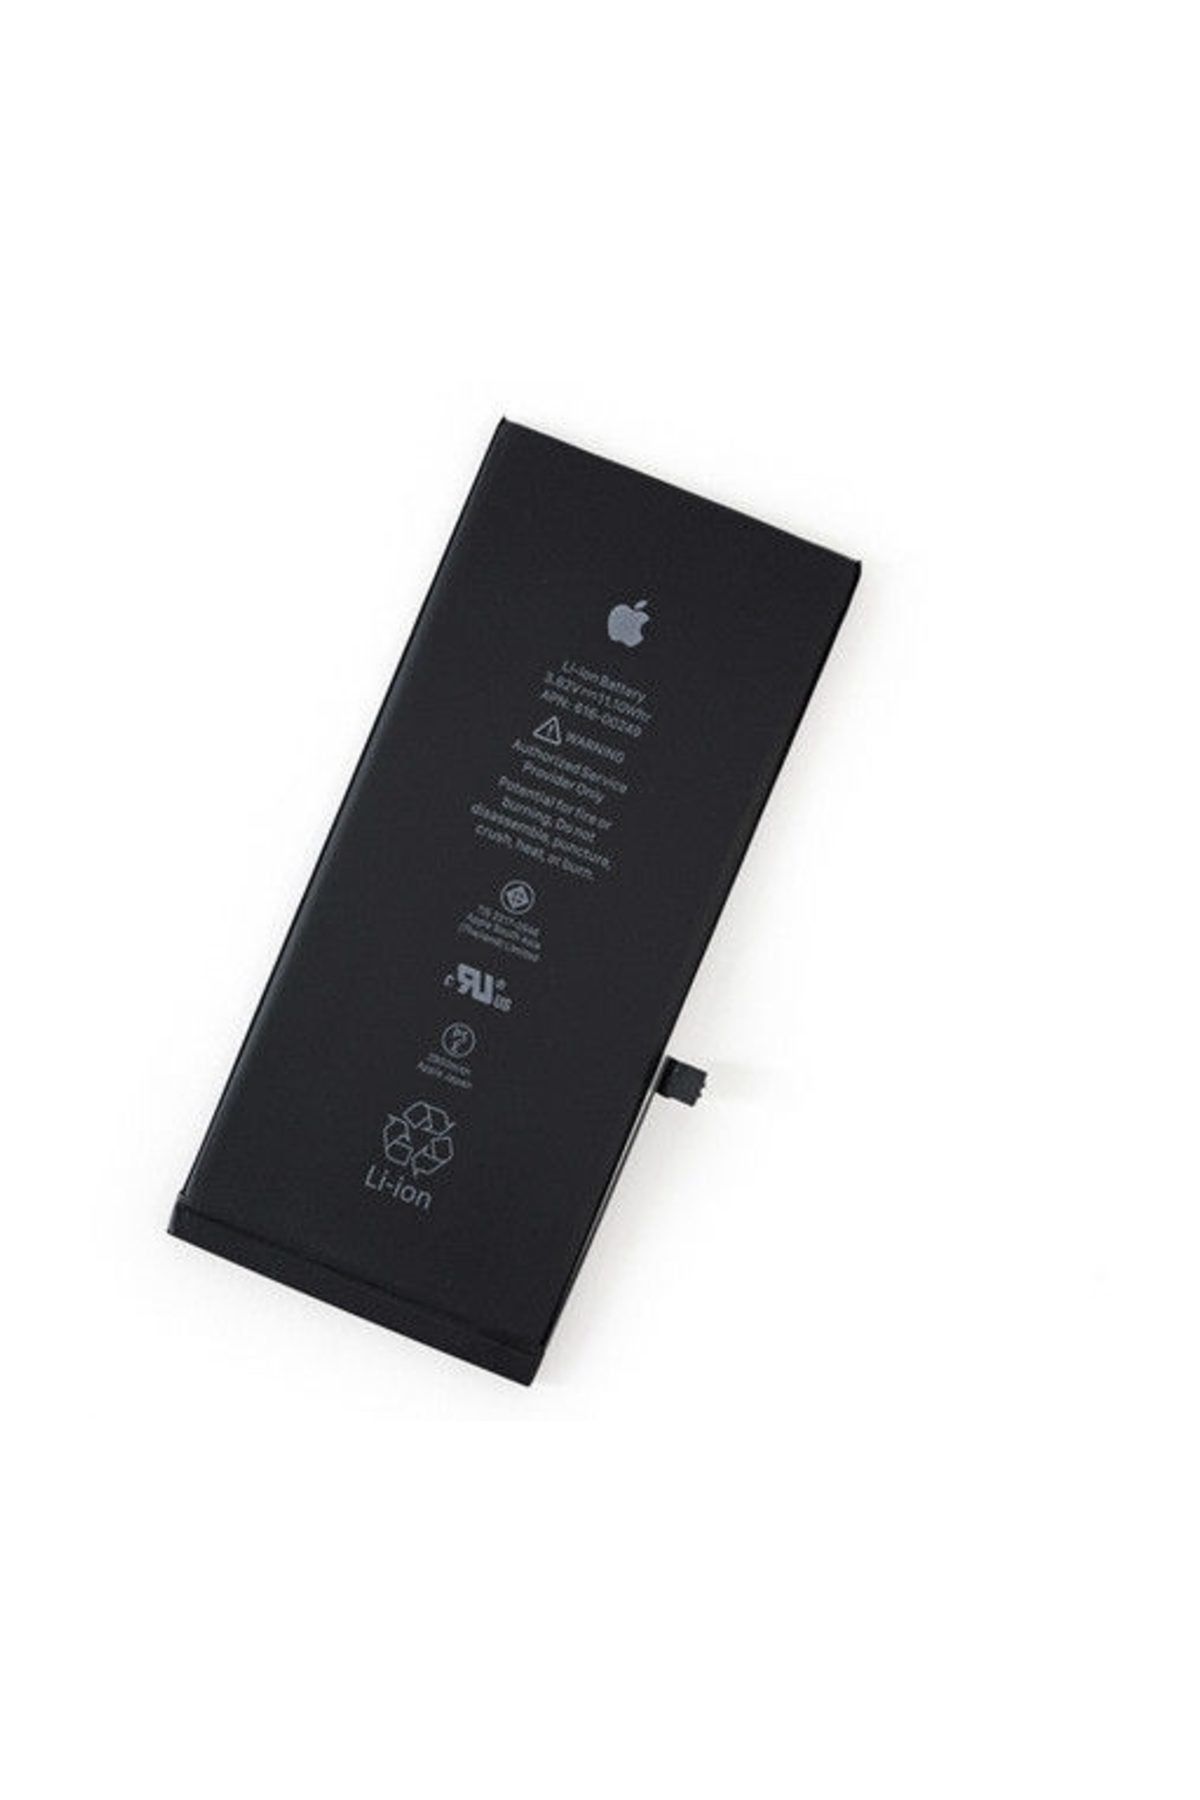 Apple iPhone 7 Plus Batarya Pil ve Tamir Seti